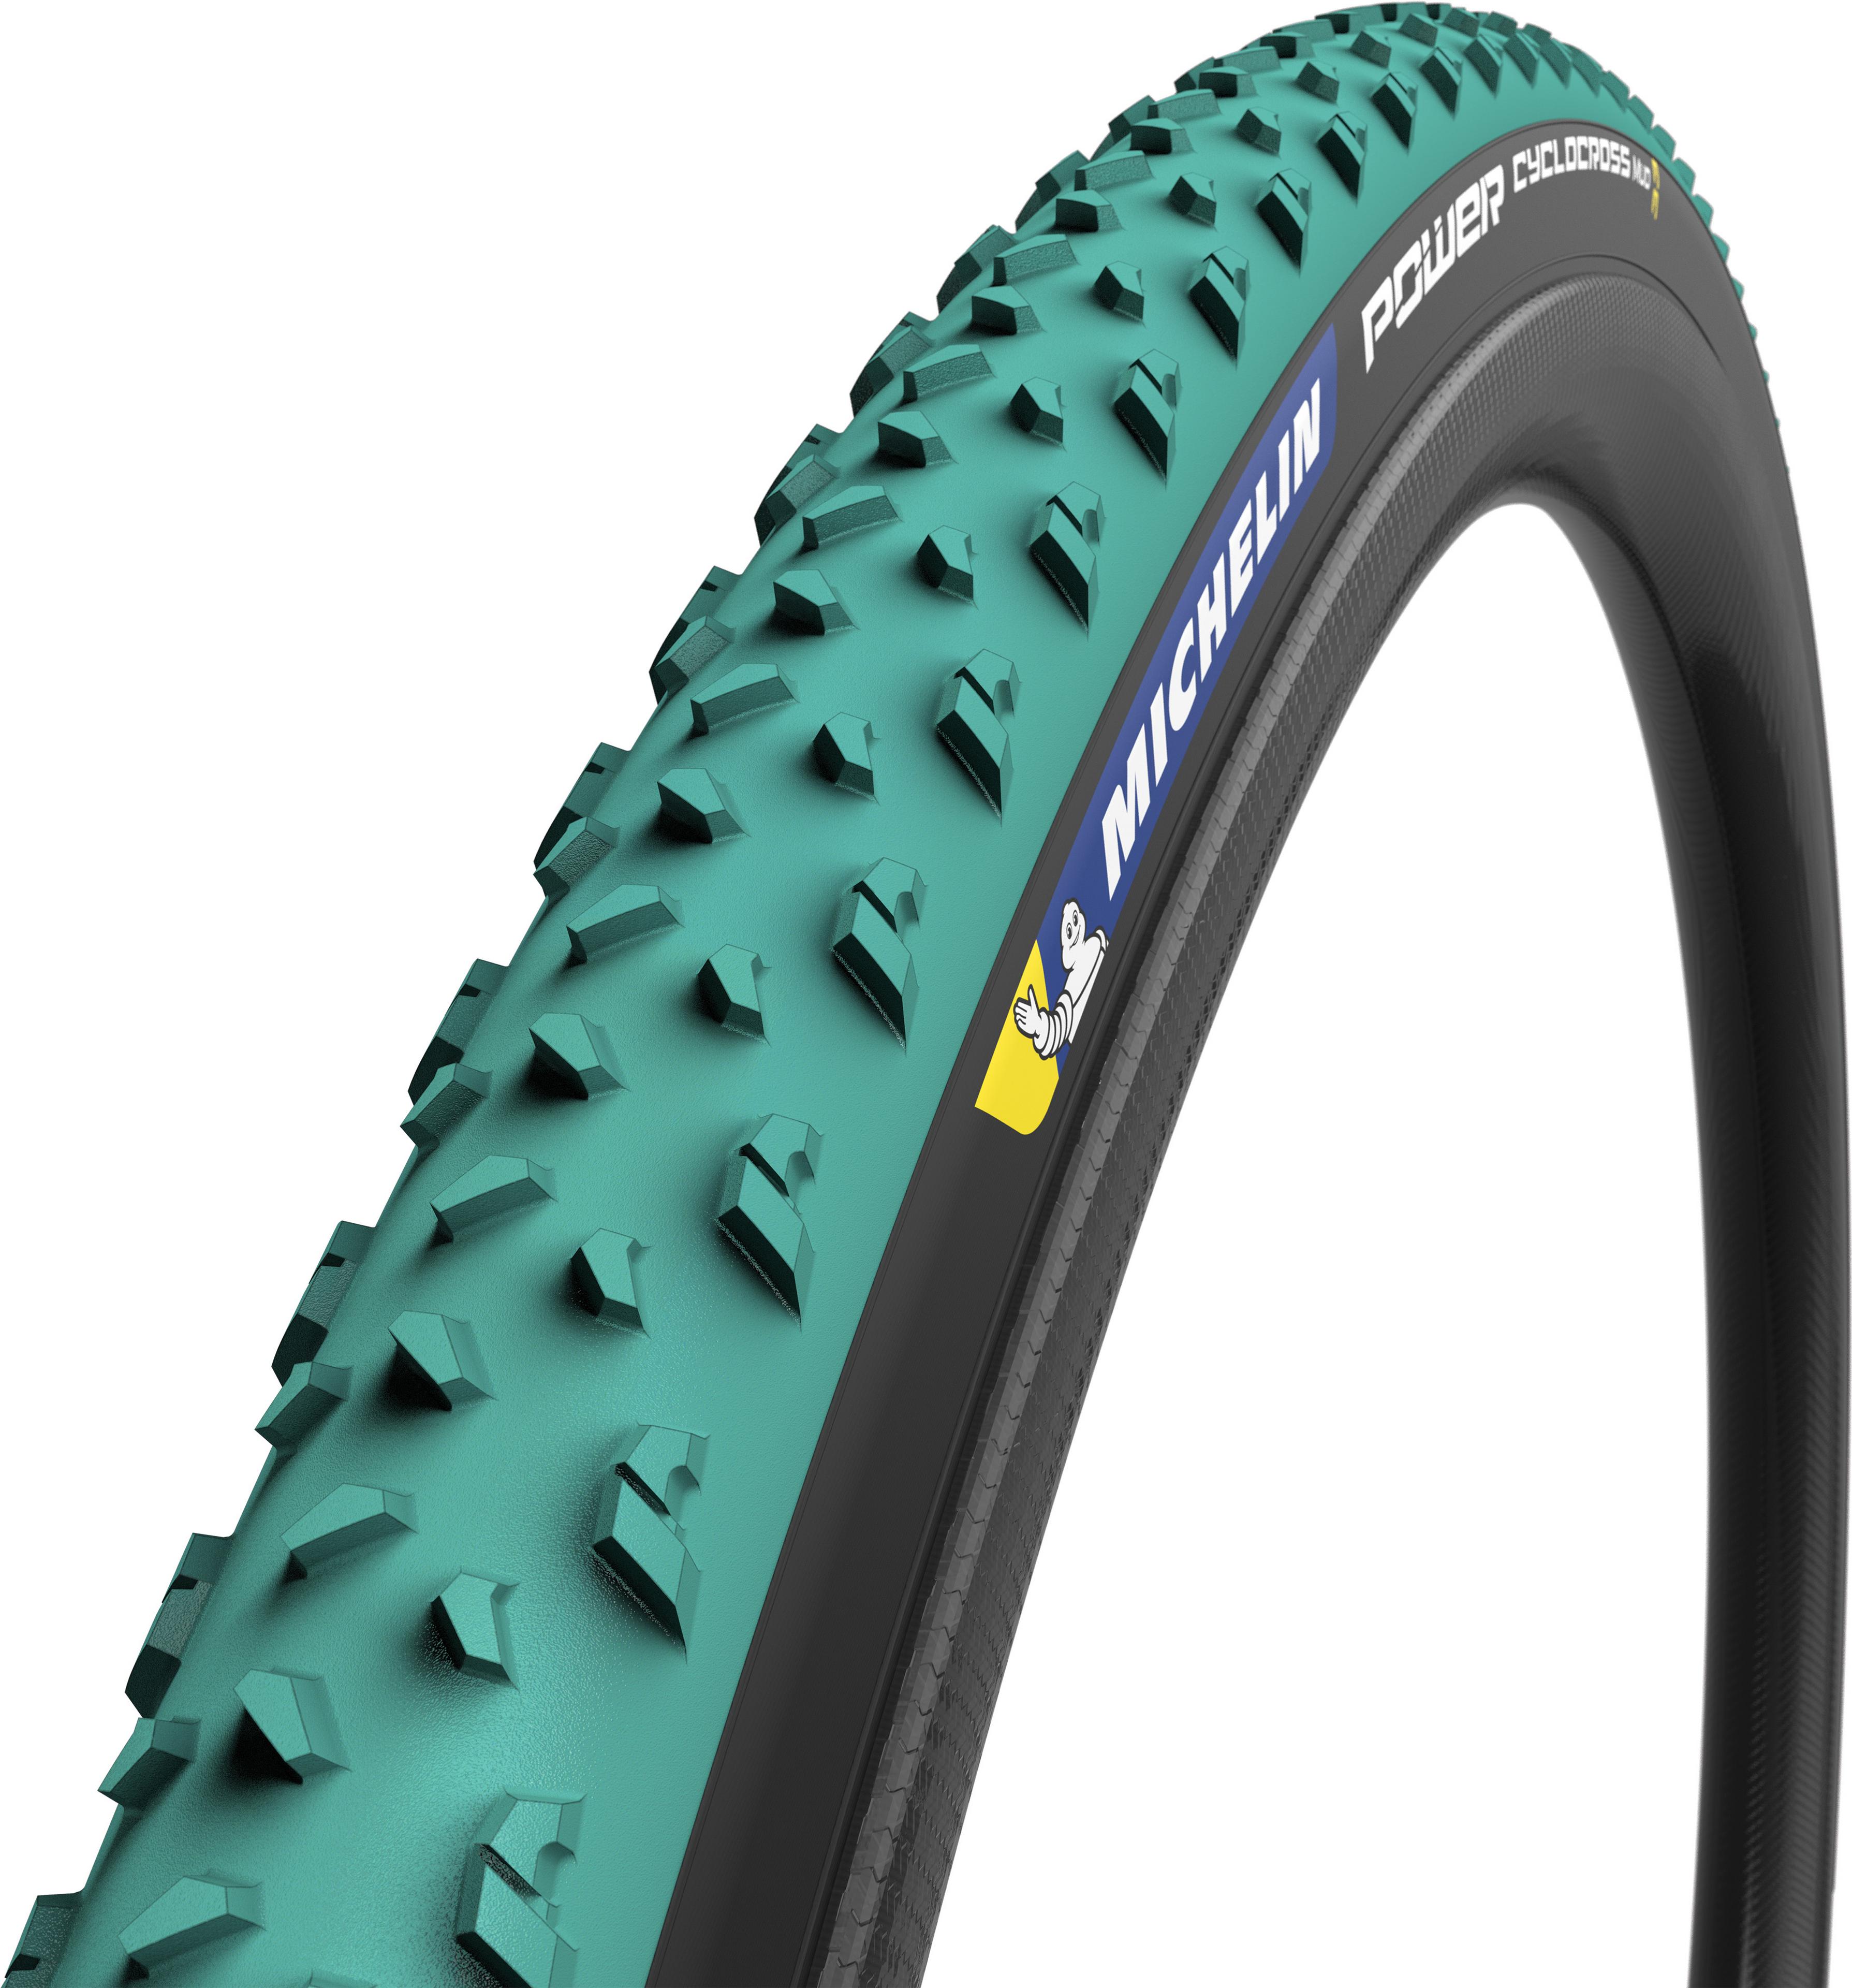 Michelin Power Cyclocross Mud チューブレスレディタイヤ | Chain